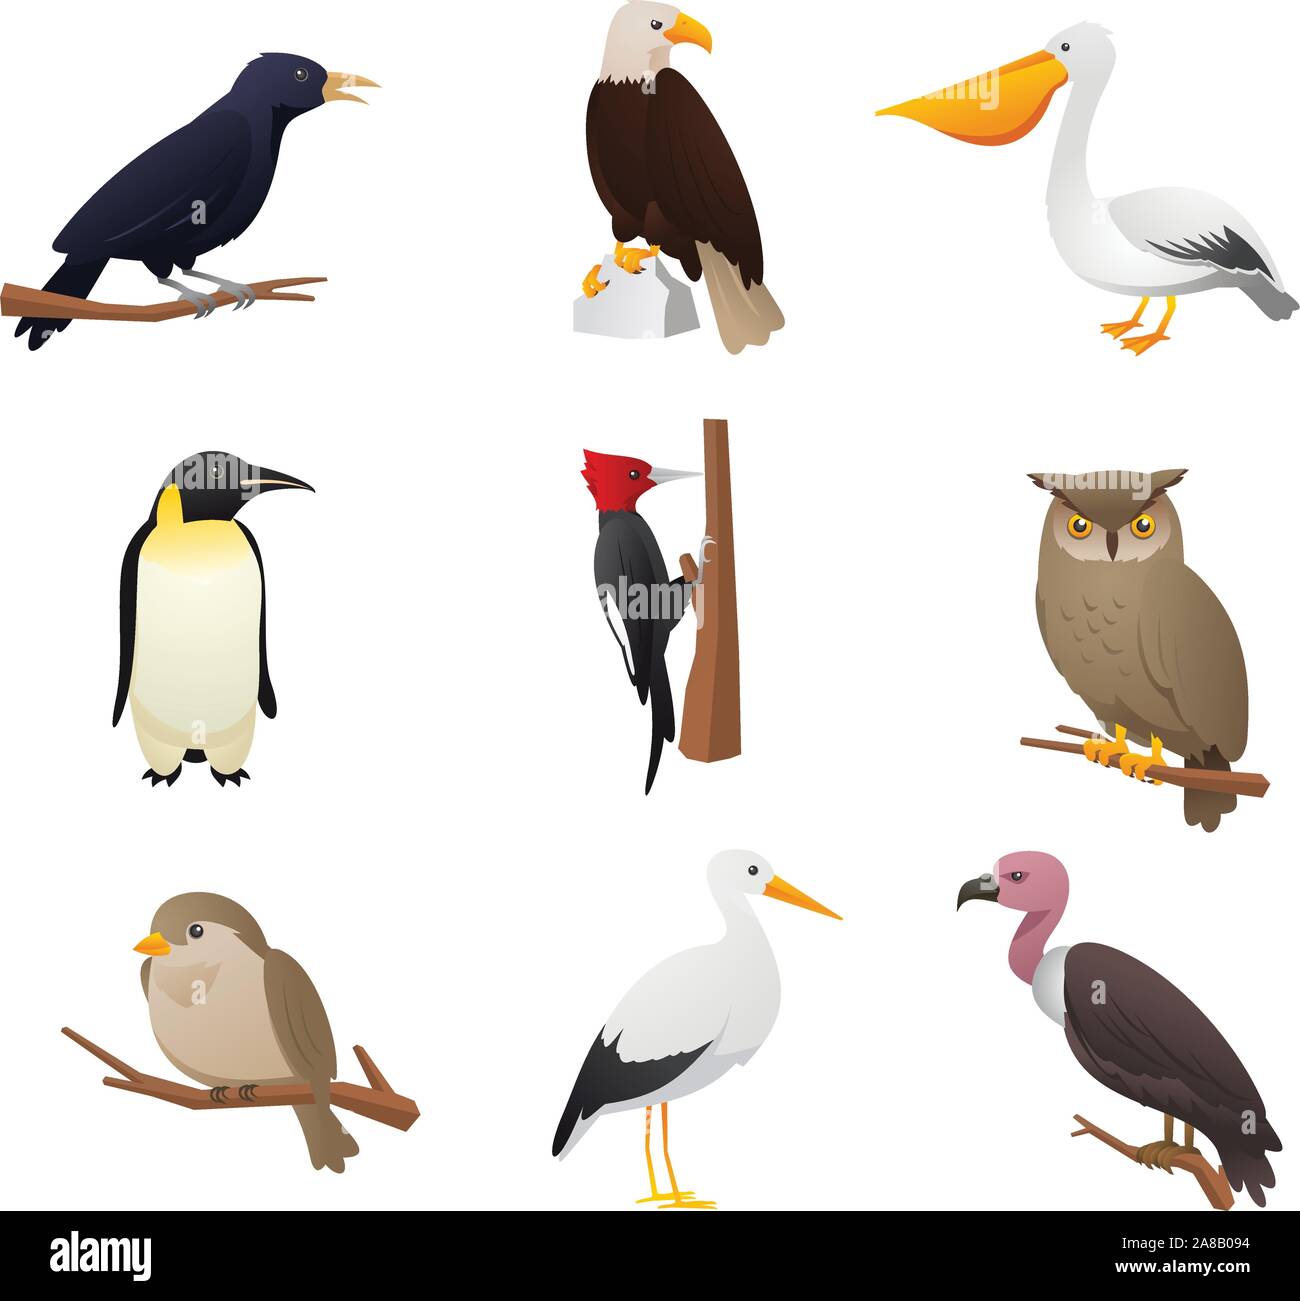 Realistische Vogelsammlung mit Eule, Pelikan, Specht, Pinguin, Adler, Vogel, Kardinal und Raven Vektor-Illustration. Stock Vektor